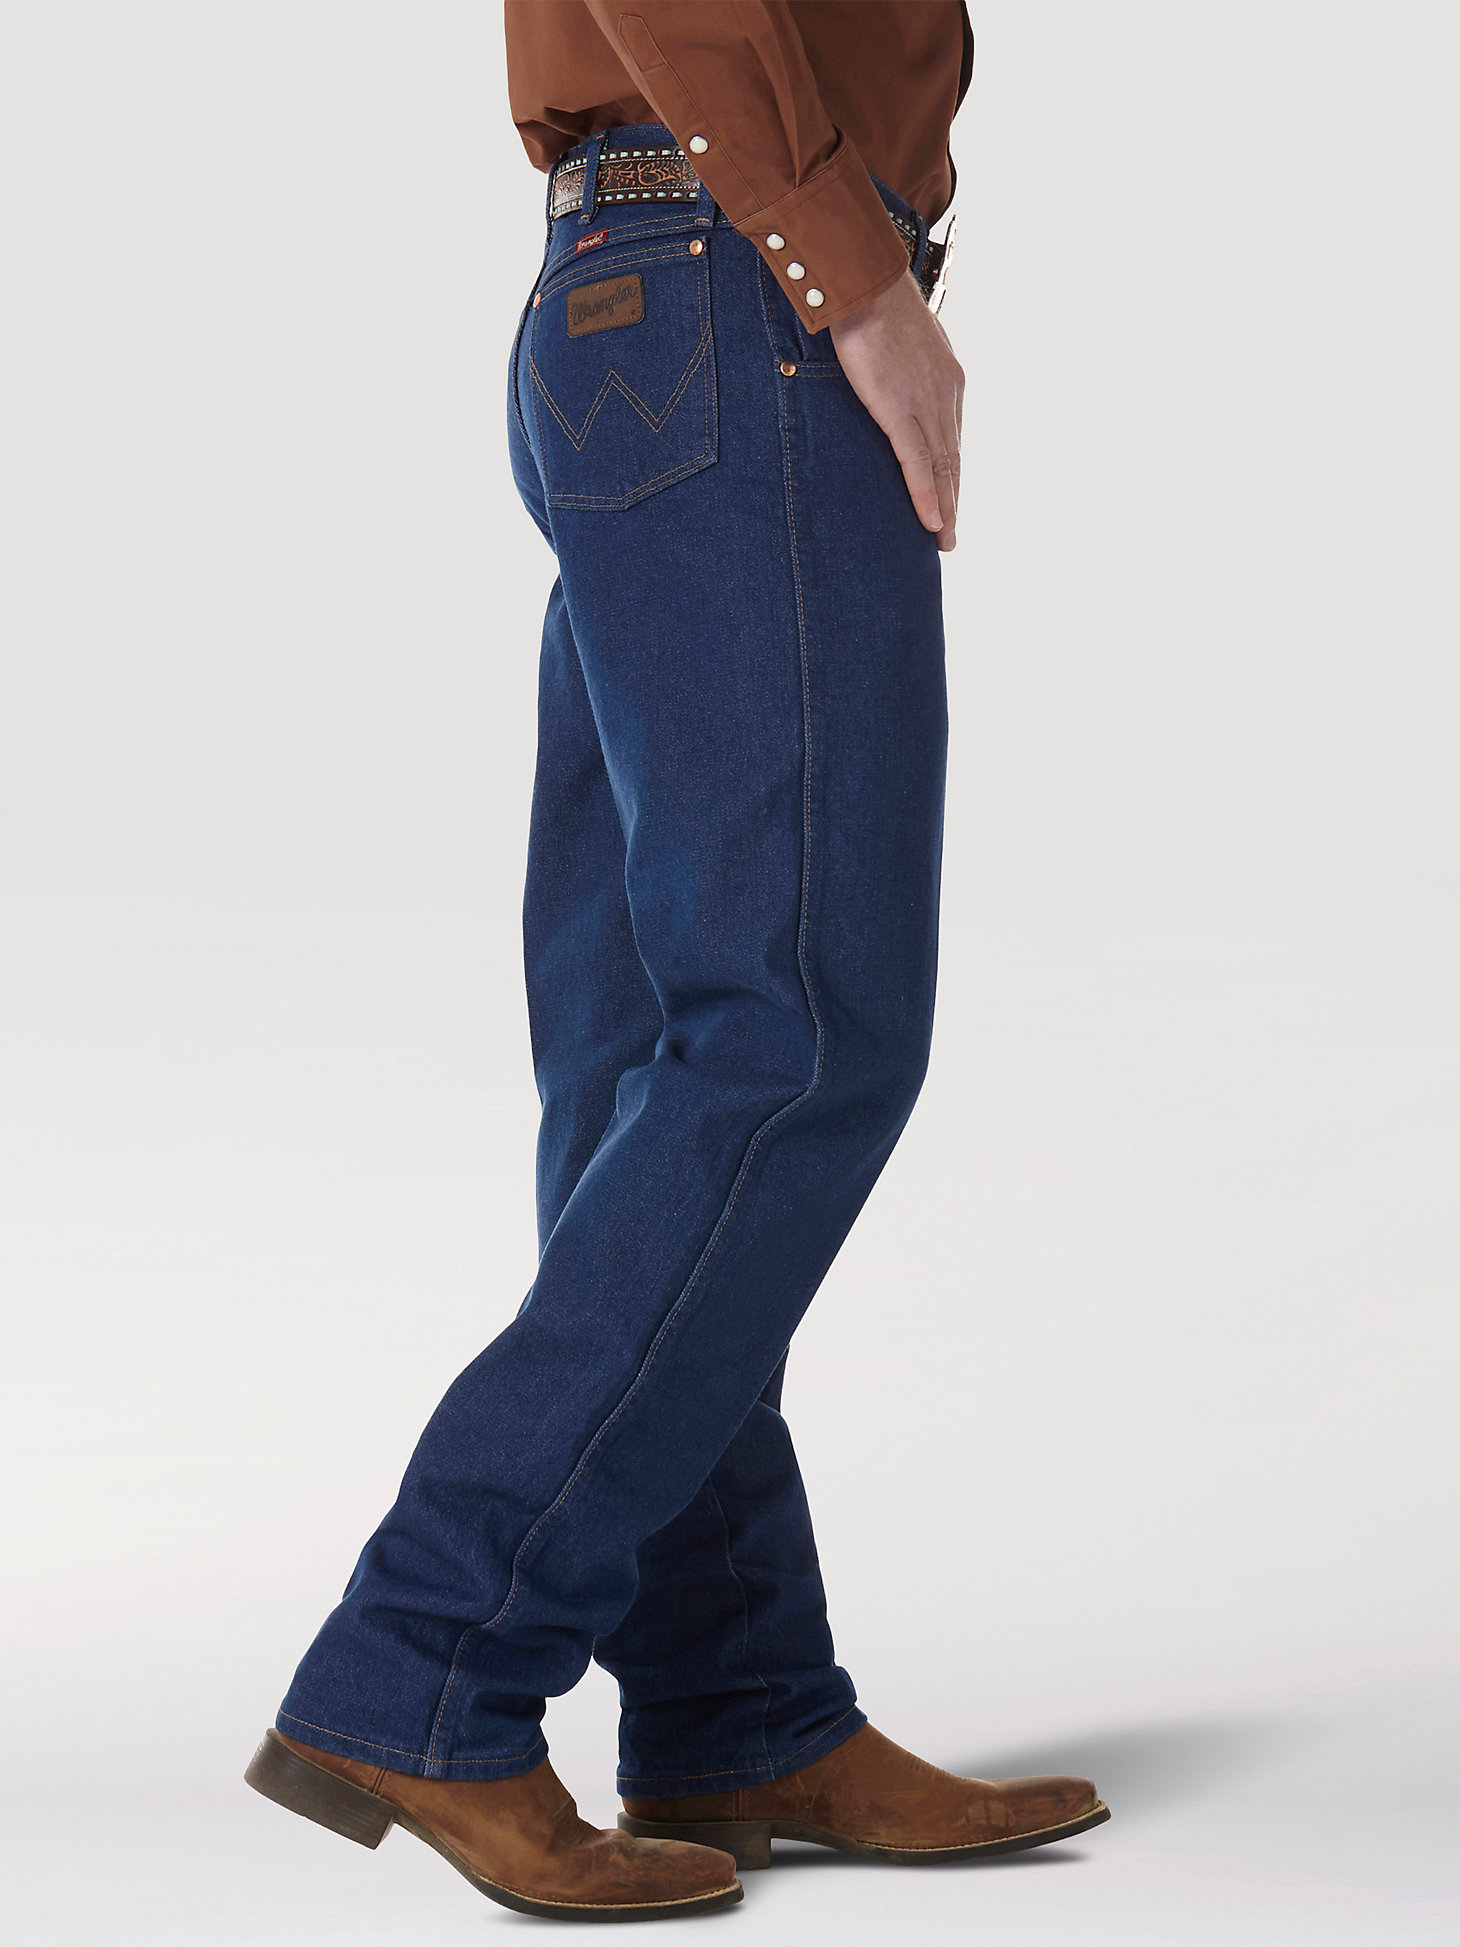 Wrangler® Cowboy Cut® Relaxed Fit Jean in Prewashed Indigo alternative view 1